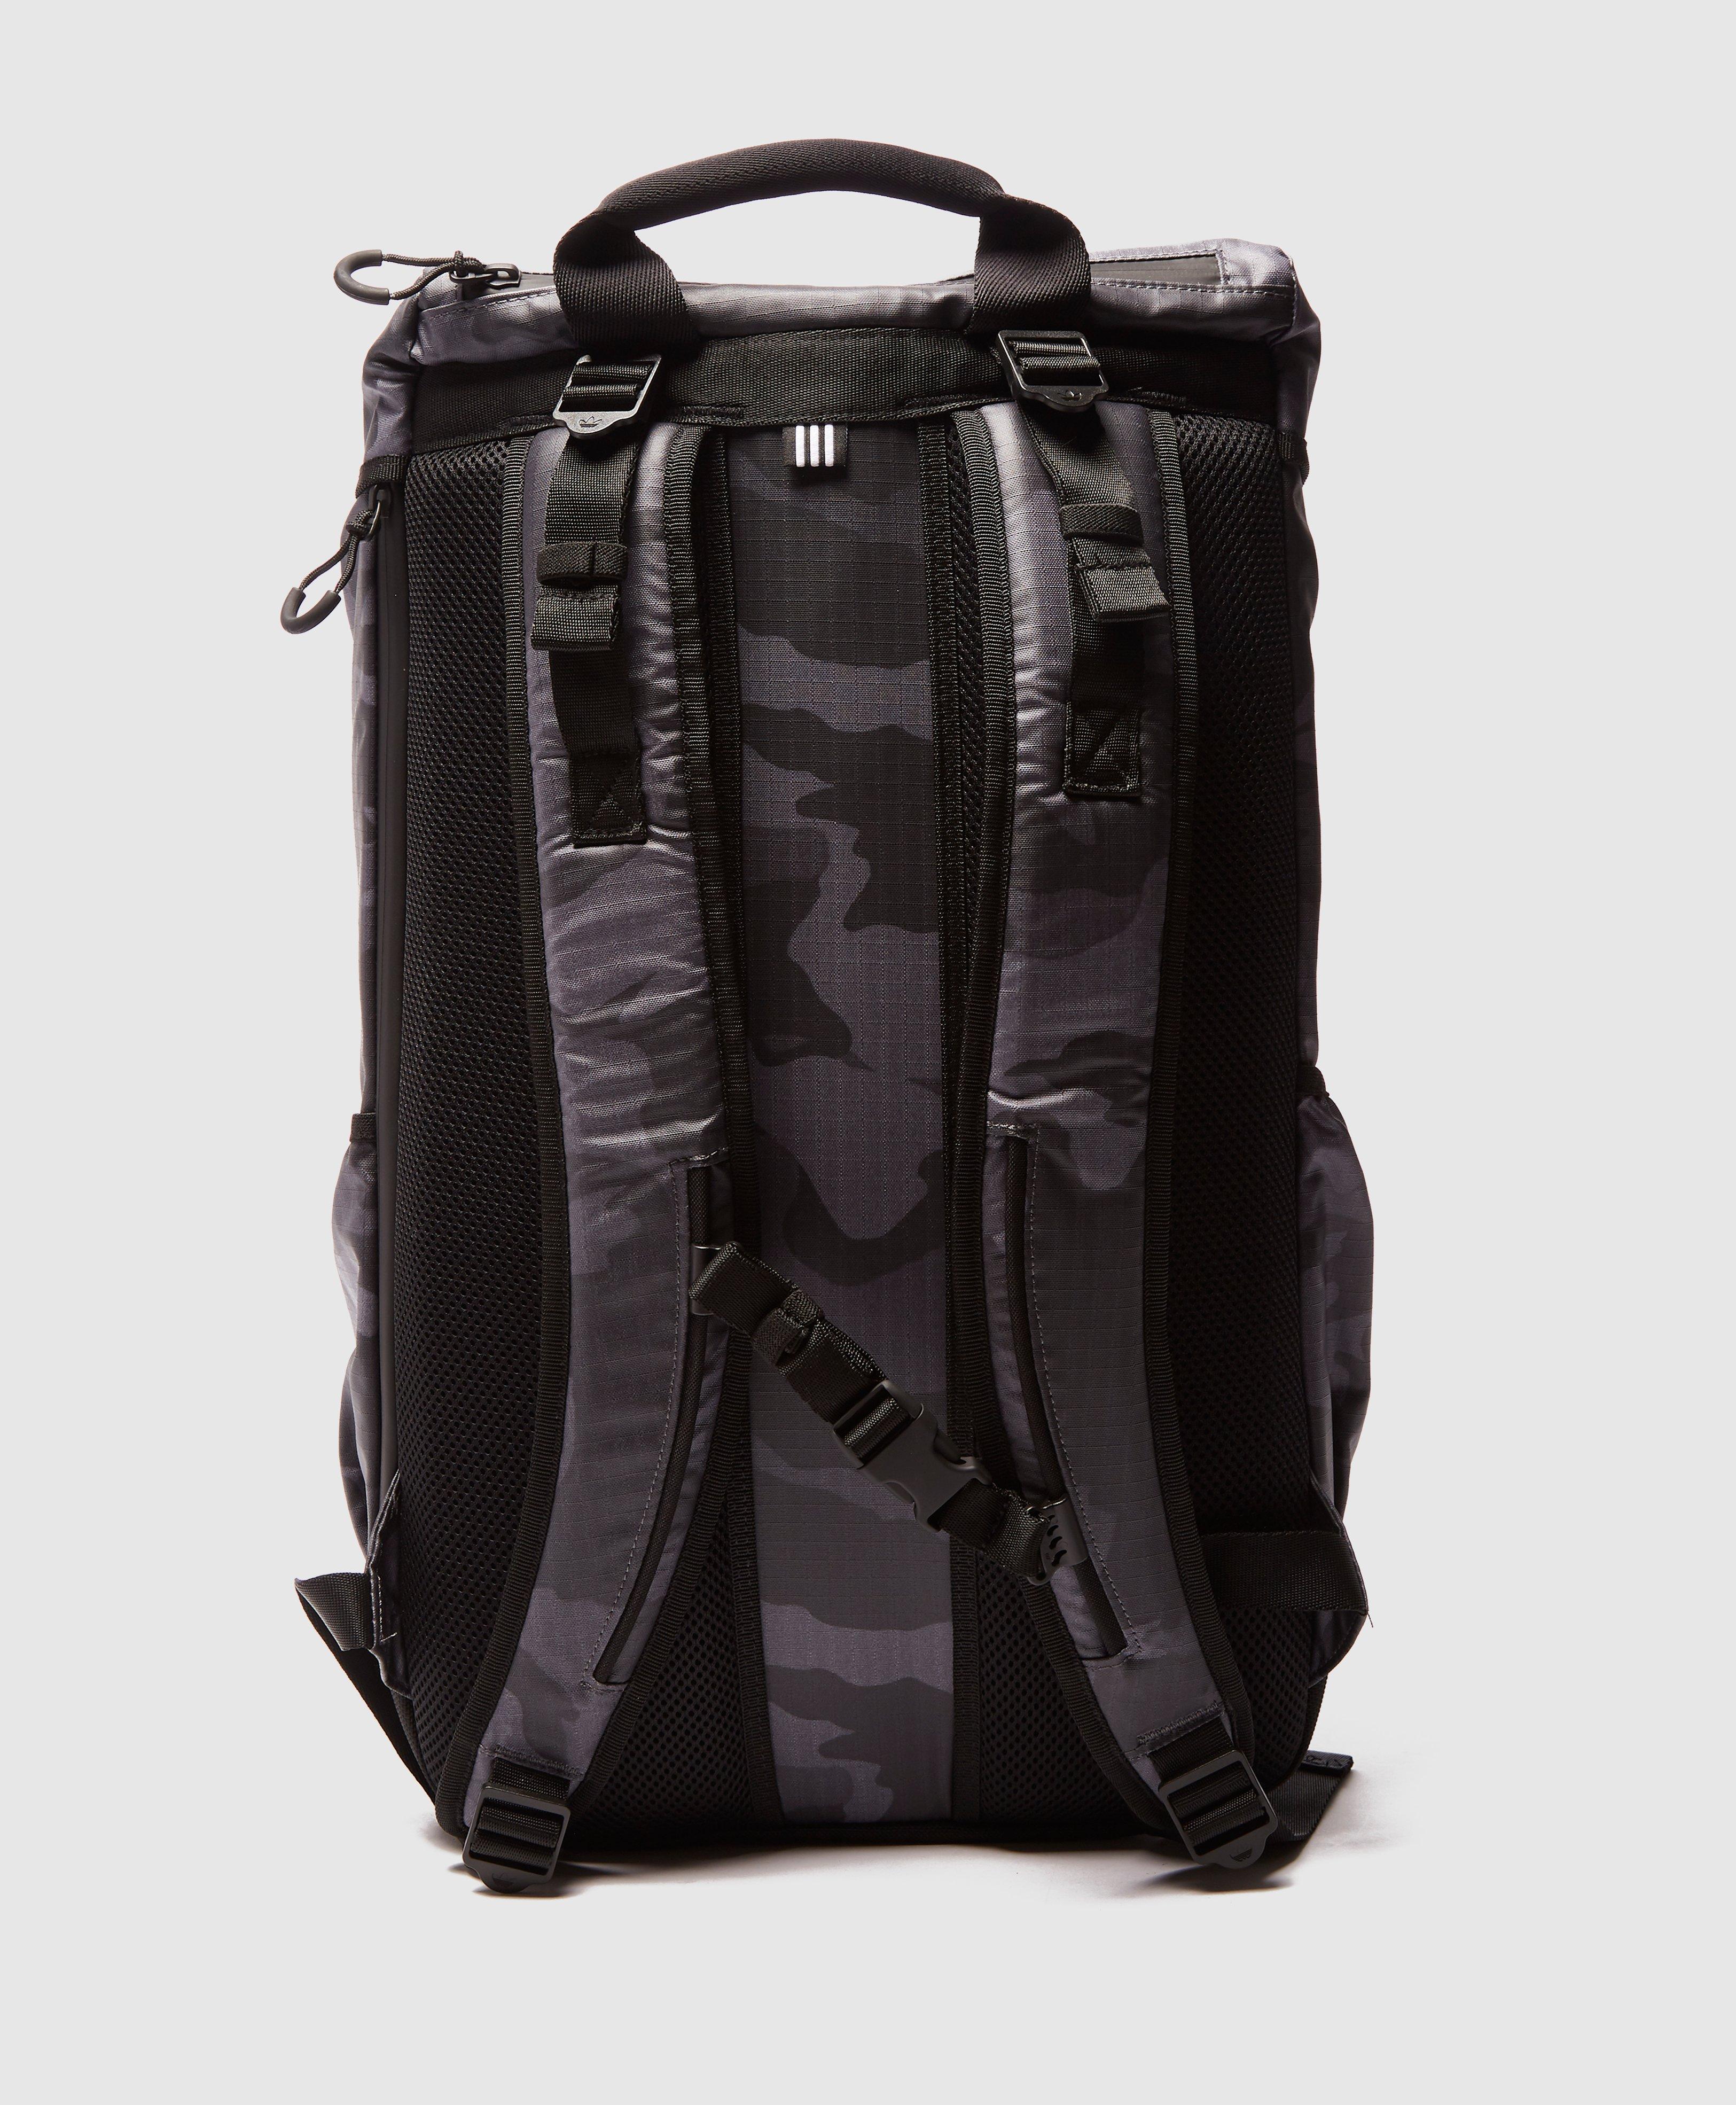 adidas black camo backpack